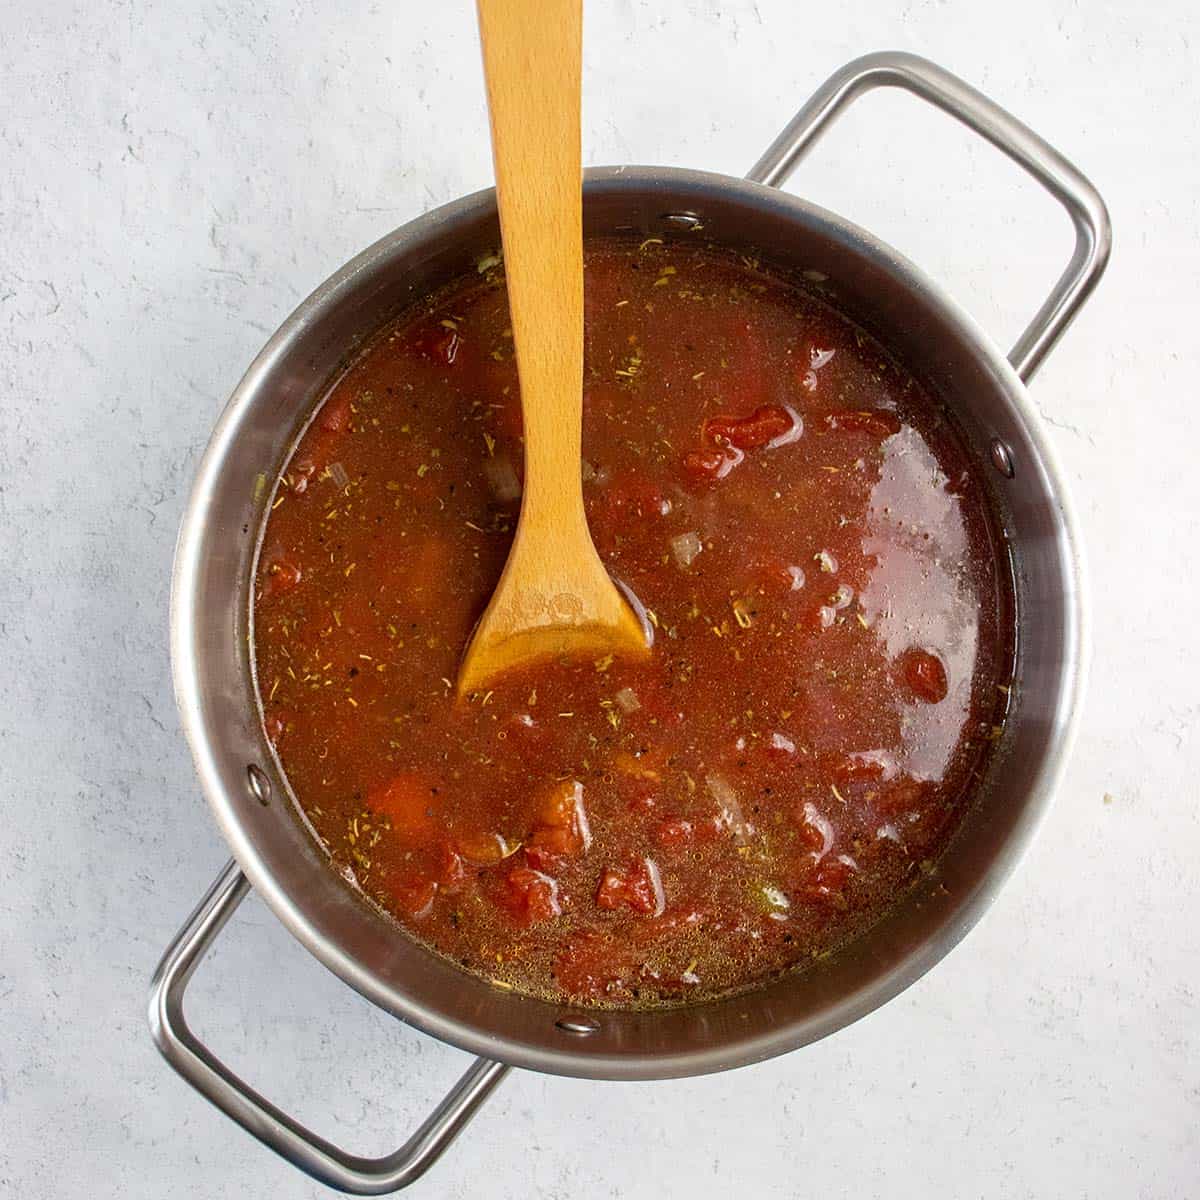 Remaining ingredients added to vegan tomato soup.